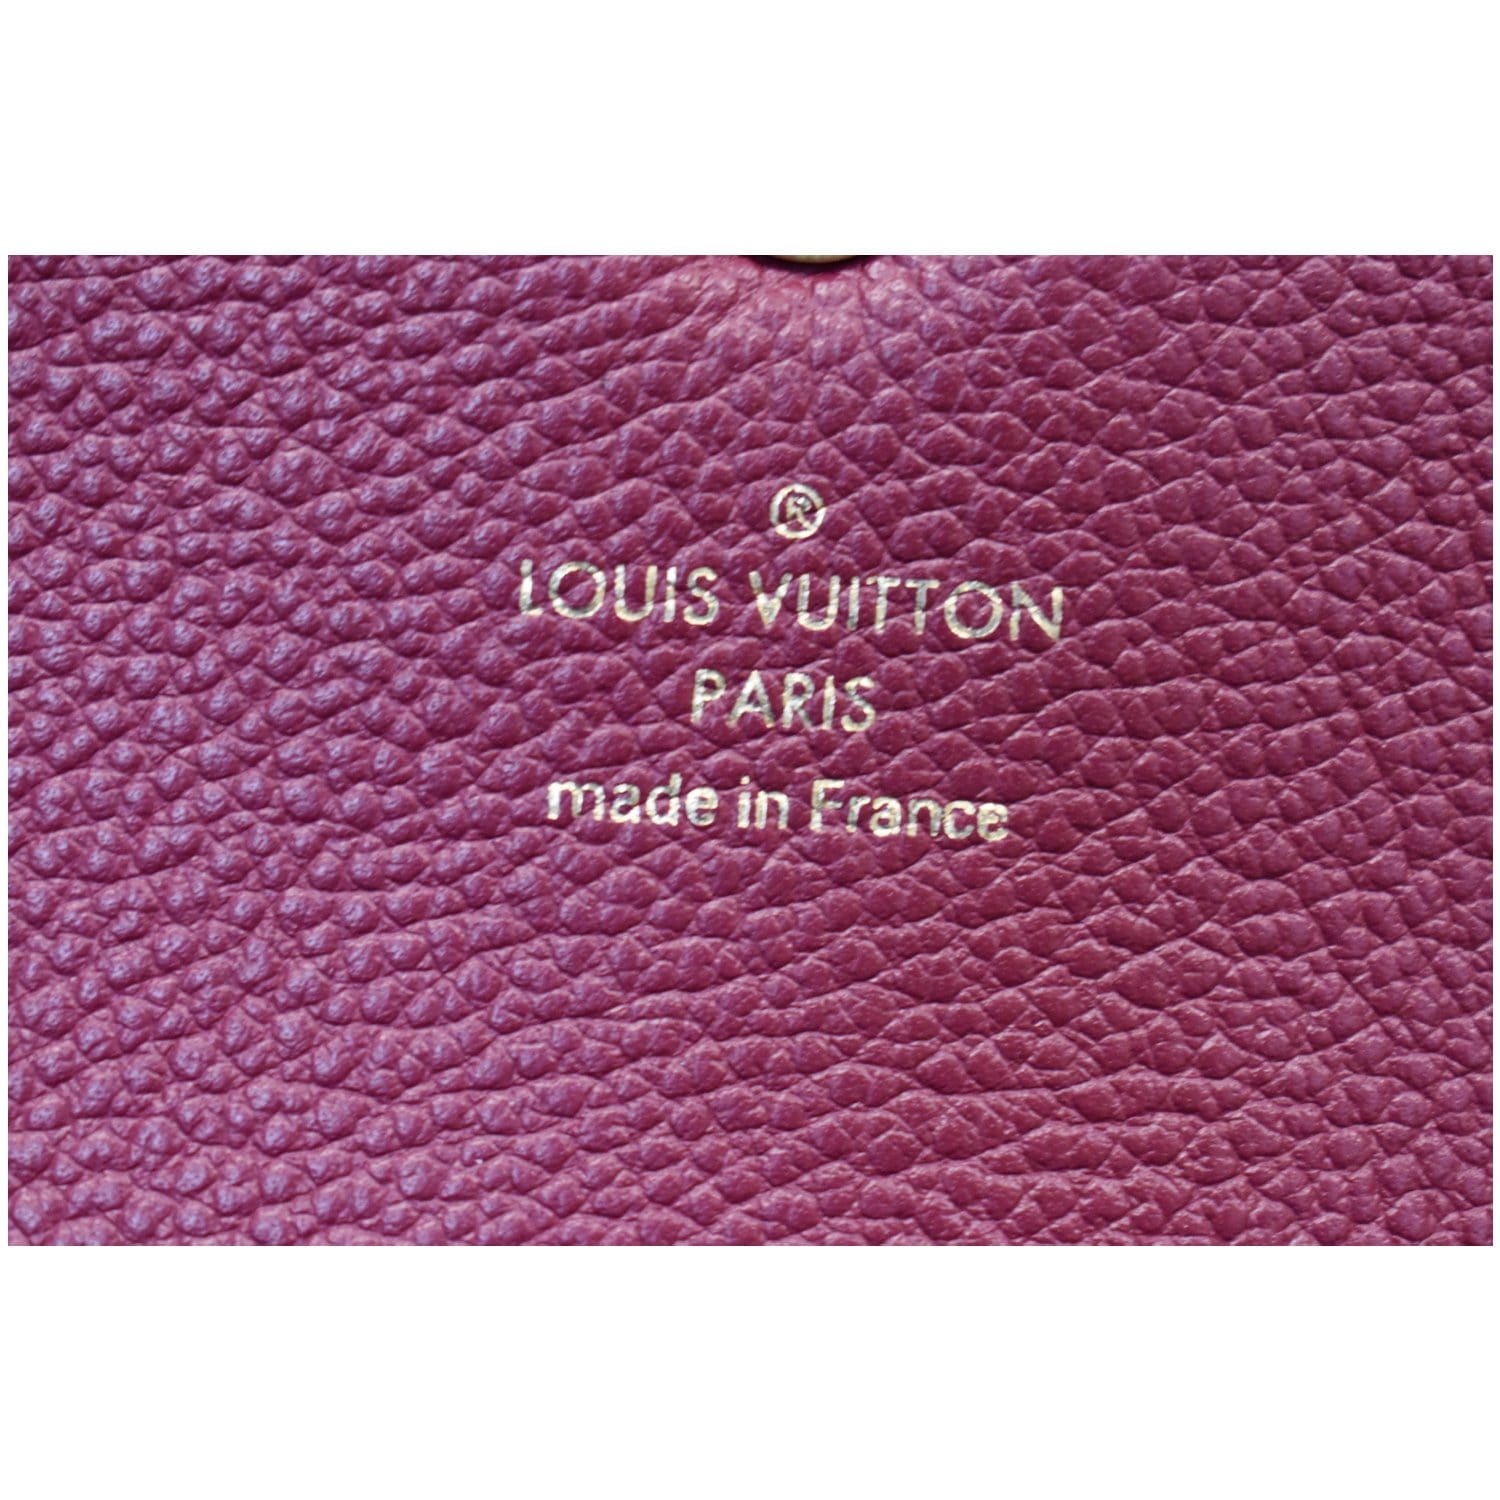 Clapton cloth wallet